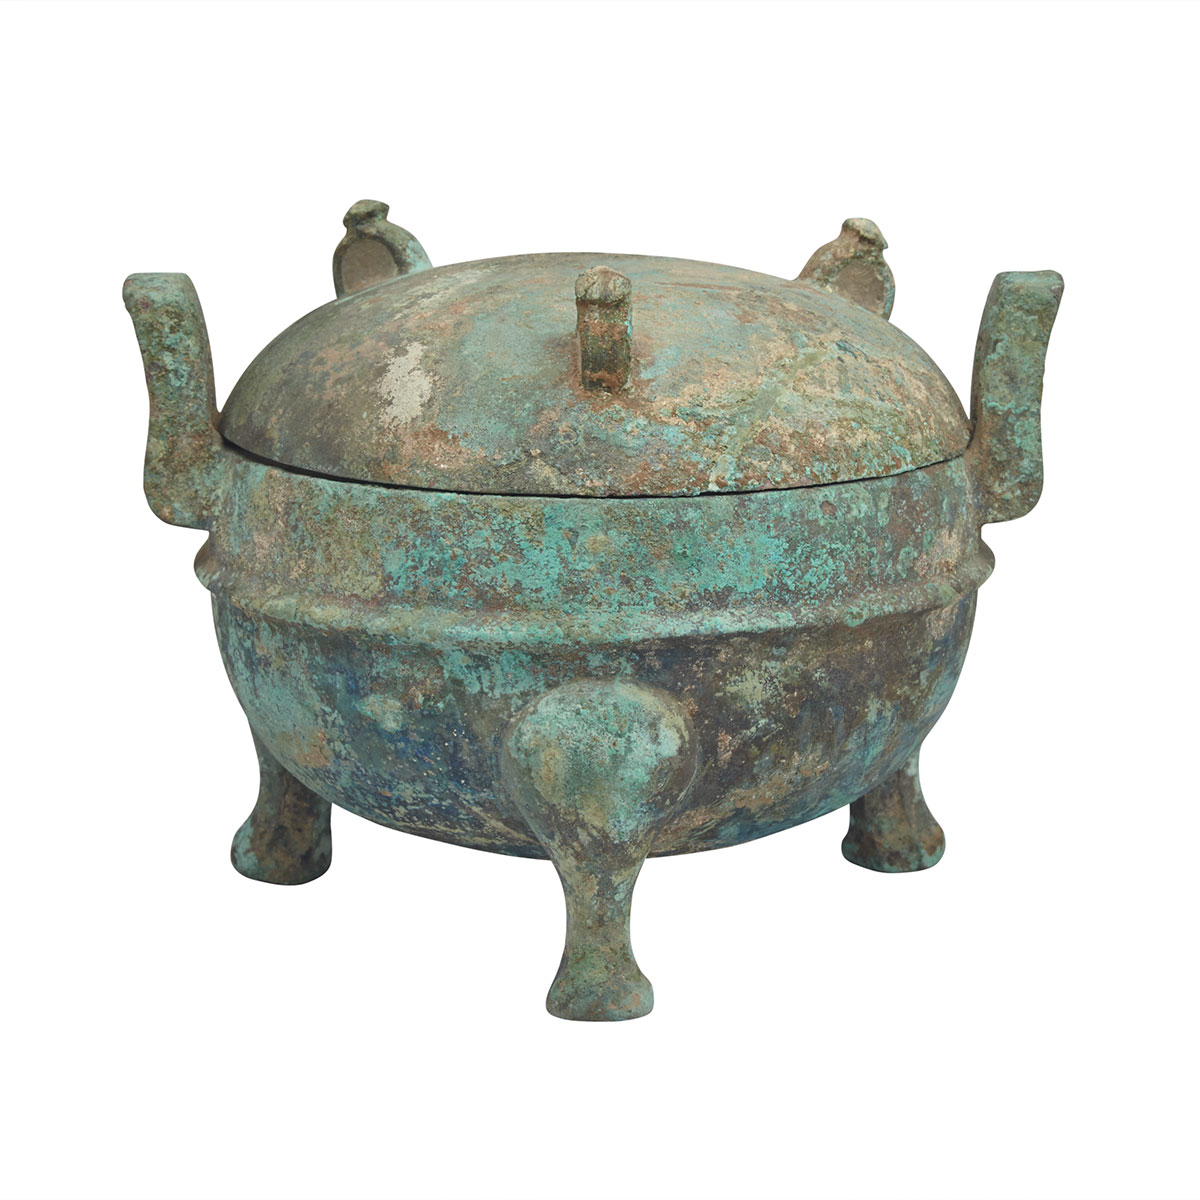 Bronze Tripod Vessel, Ding, Han Dynasty